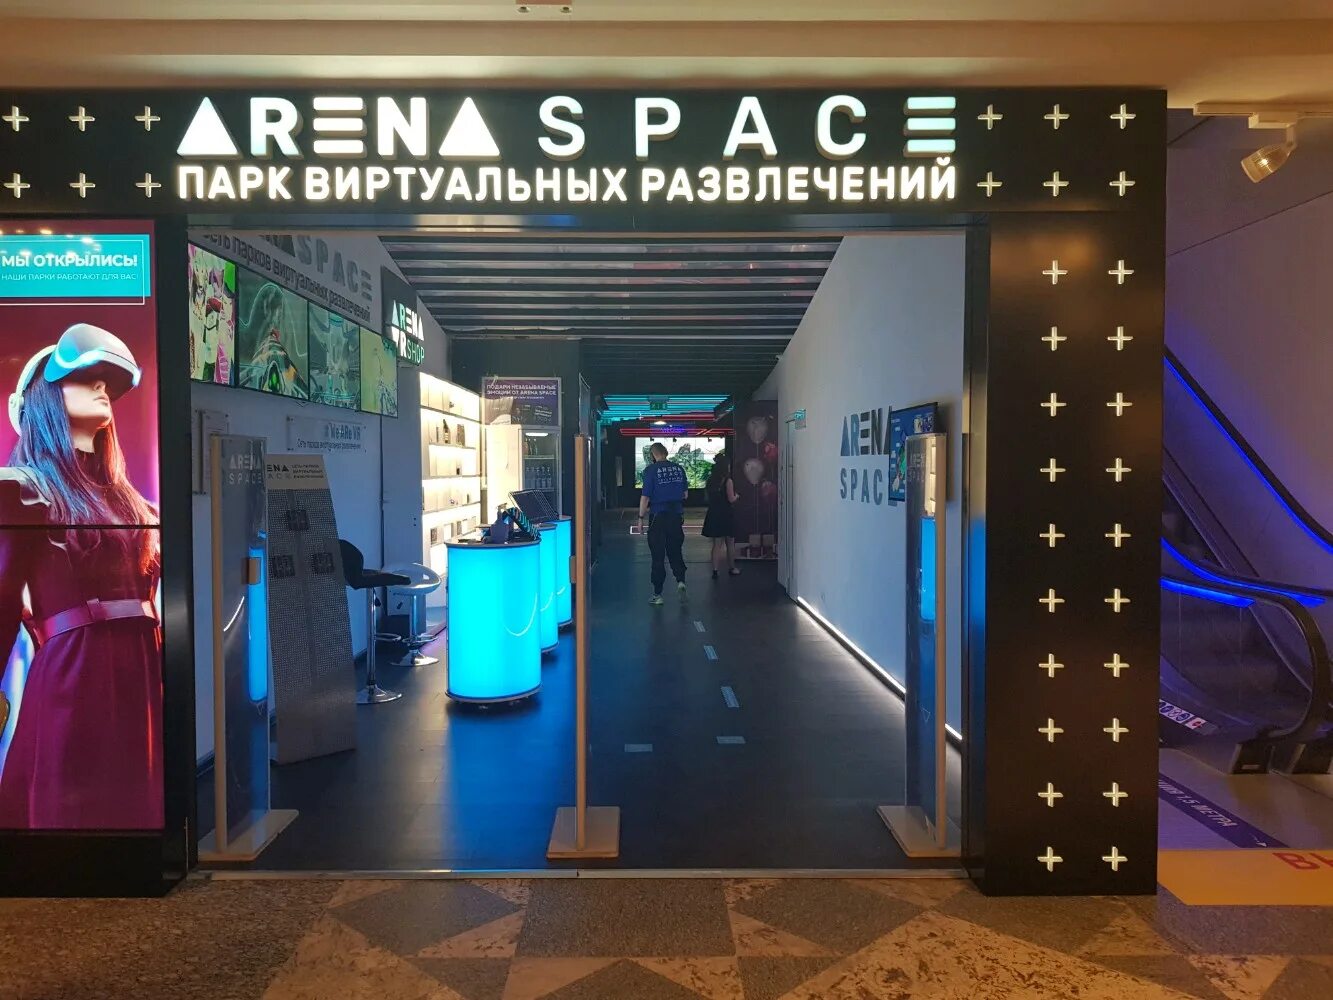 Парк виртуальных развлечений. Виртуальный парк развлечений. Арена Спейс. Arena Space Москва. Парк виртуальных развлечений Arena Space в Москве.